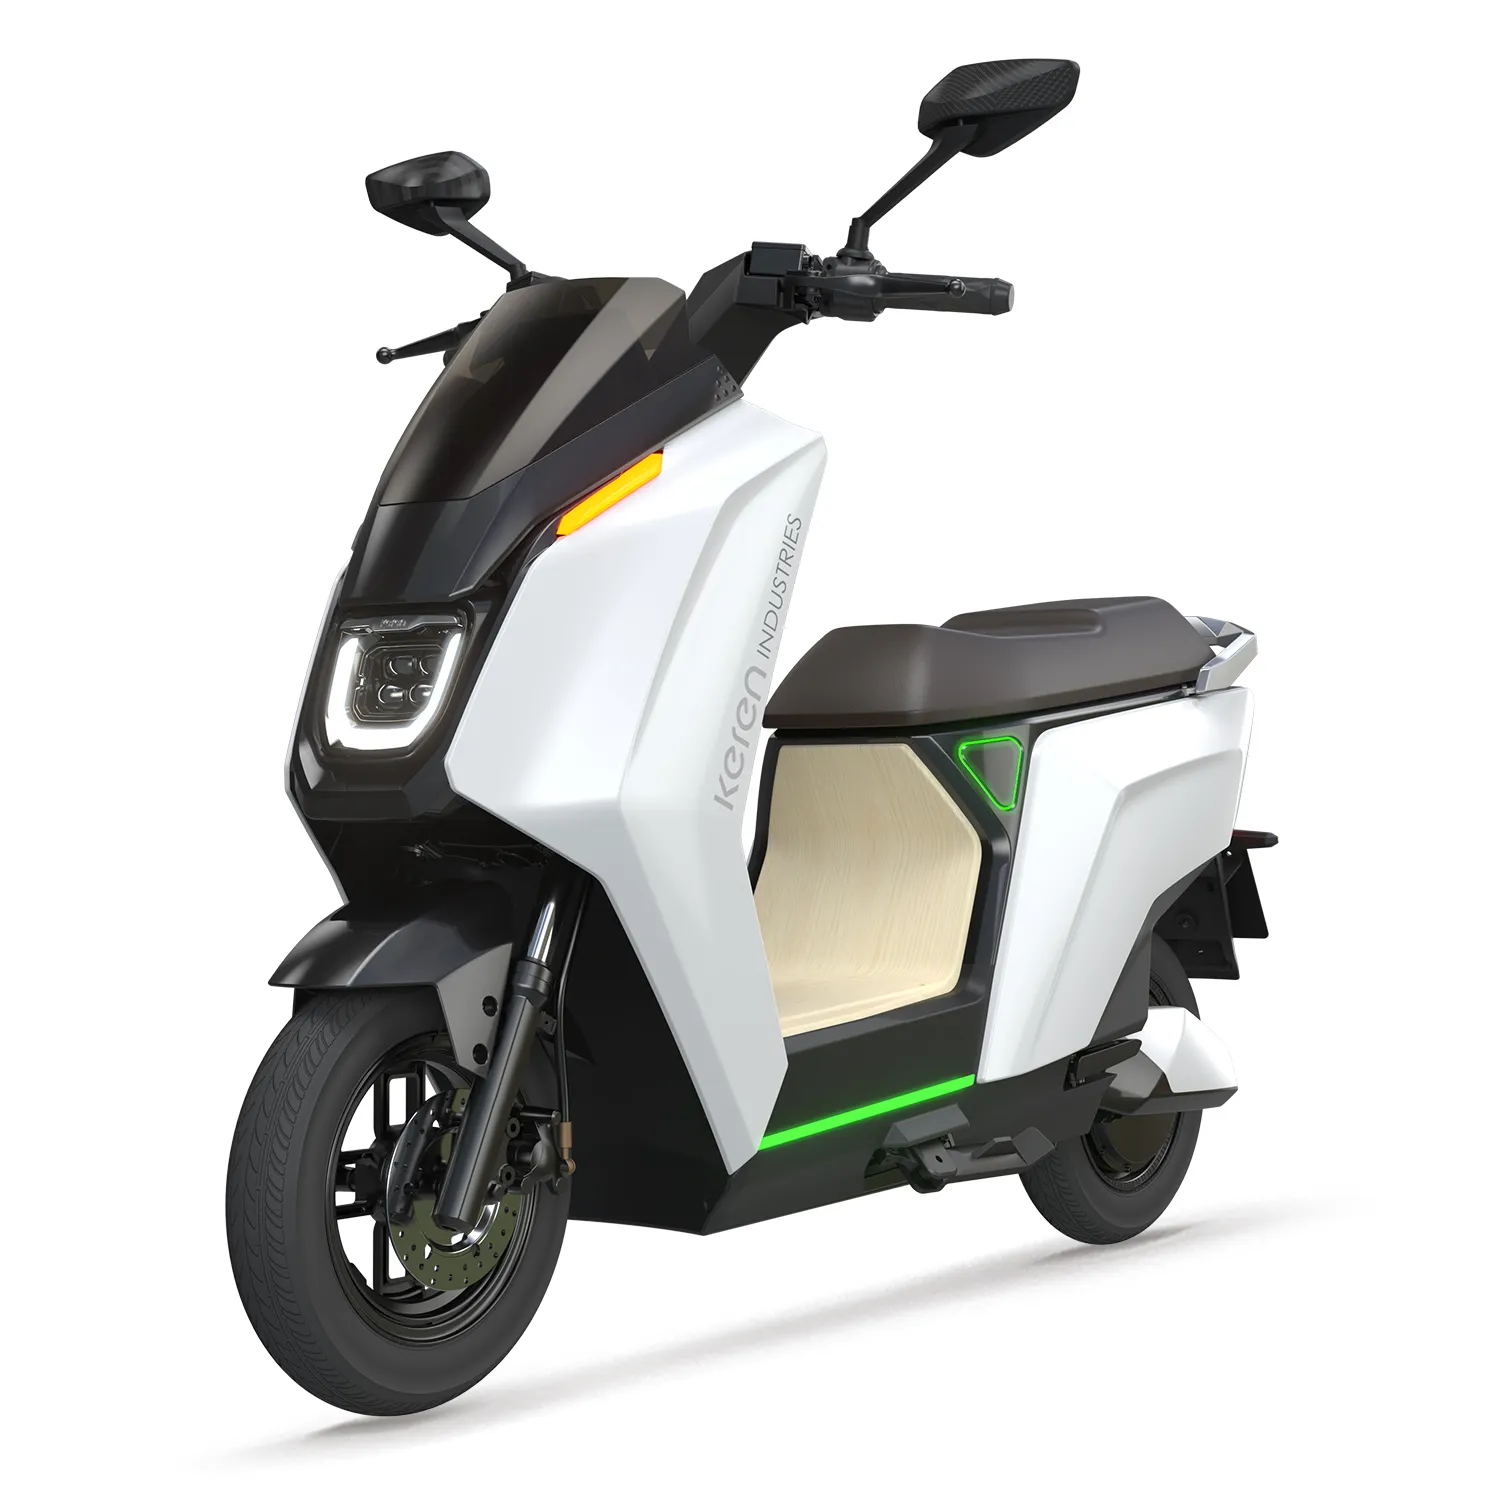 Moped scooter motosiklet üreticisi sıcak satış 72V 32Ah akülü elektrikli motosiklet